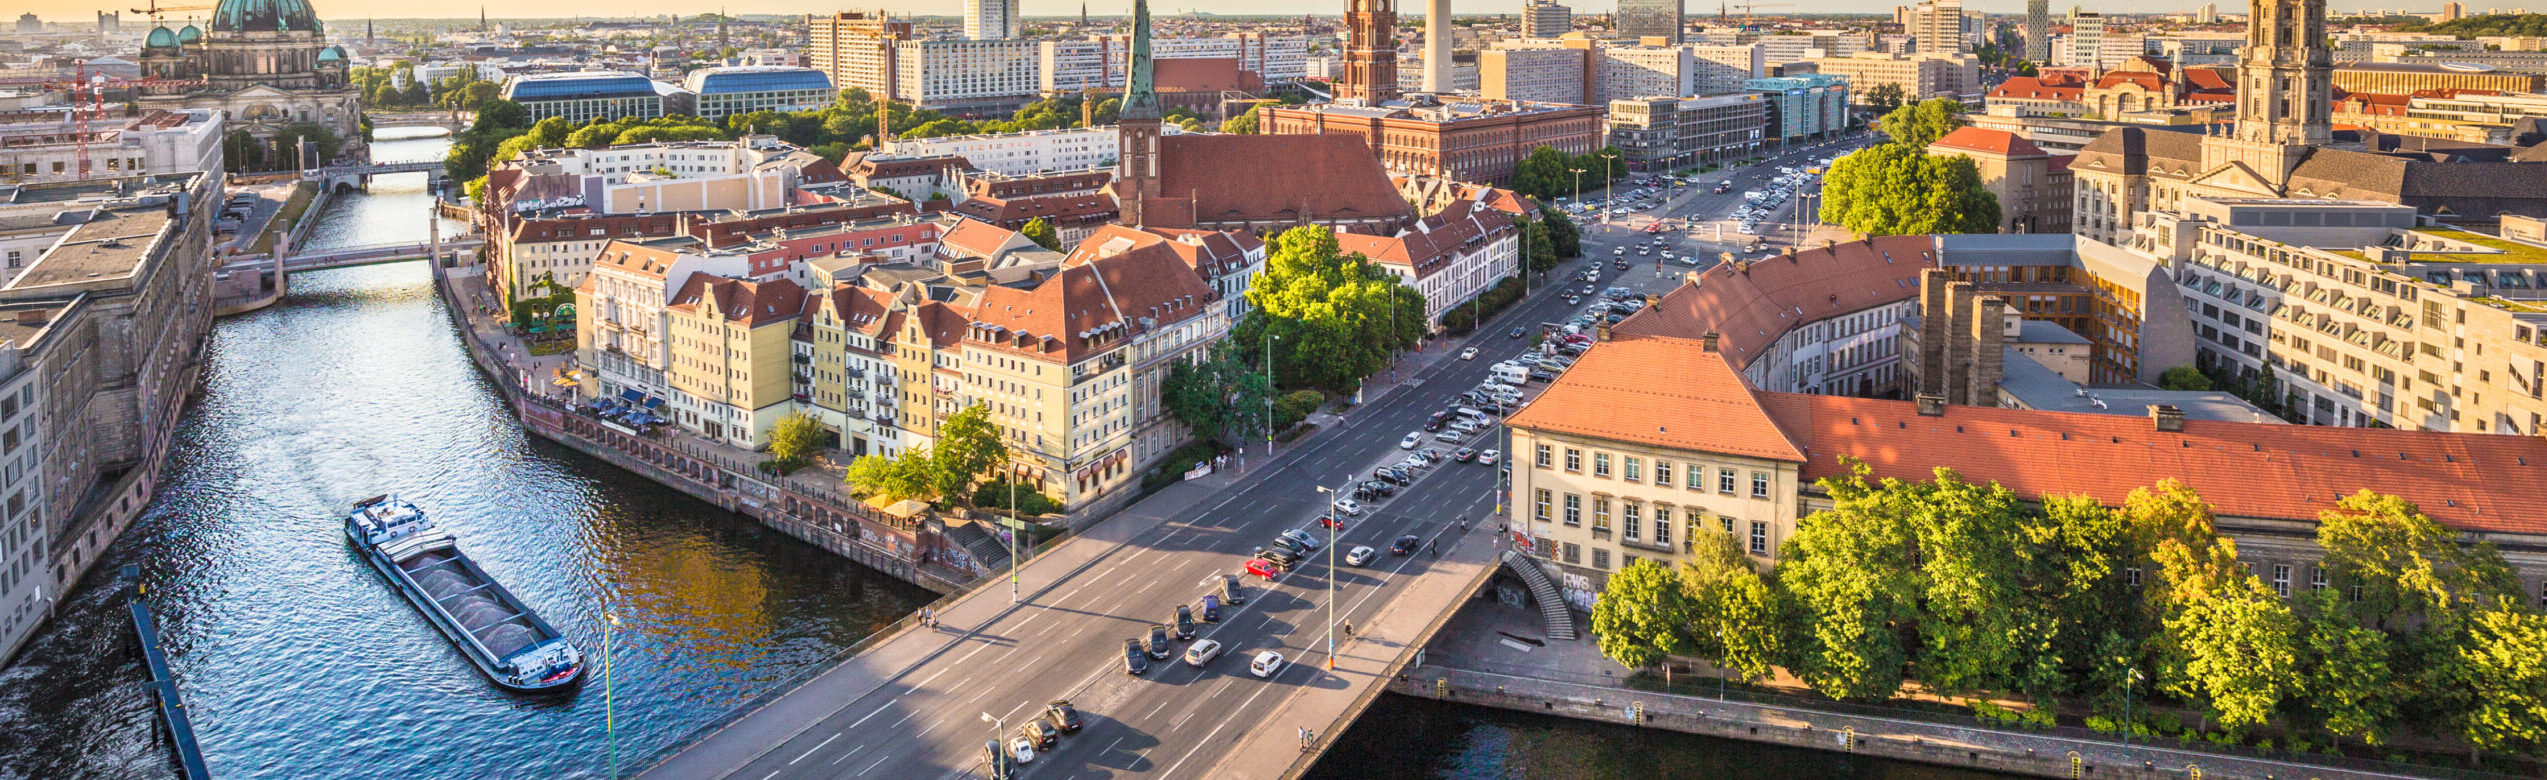 Flights to Berlin - View Of Main City